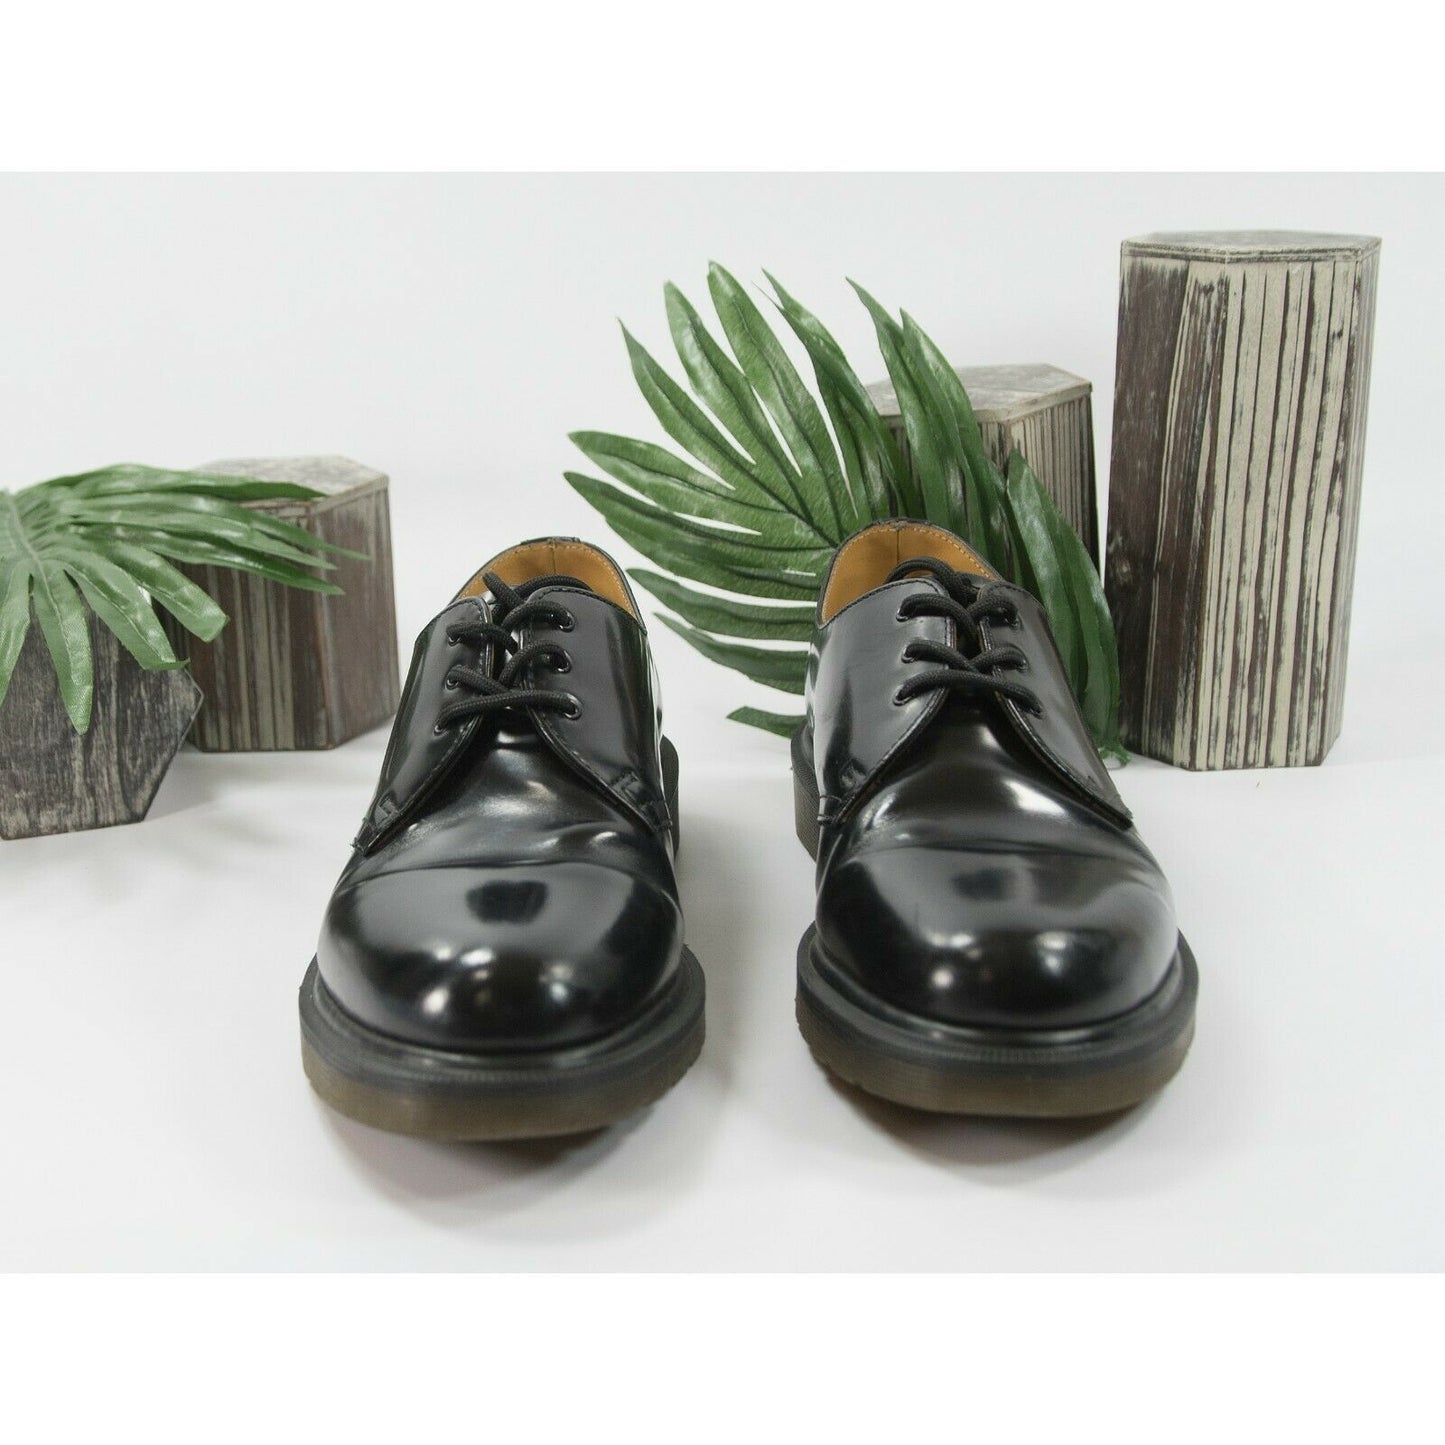 Dr. Martens 1461 PW Black Leather Lace Up Oxford Shoes Size 9